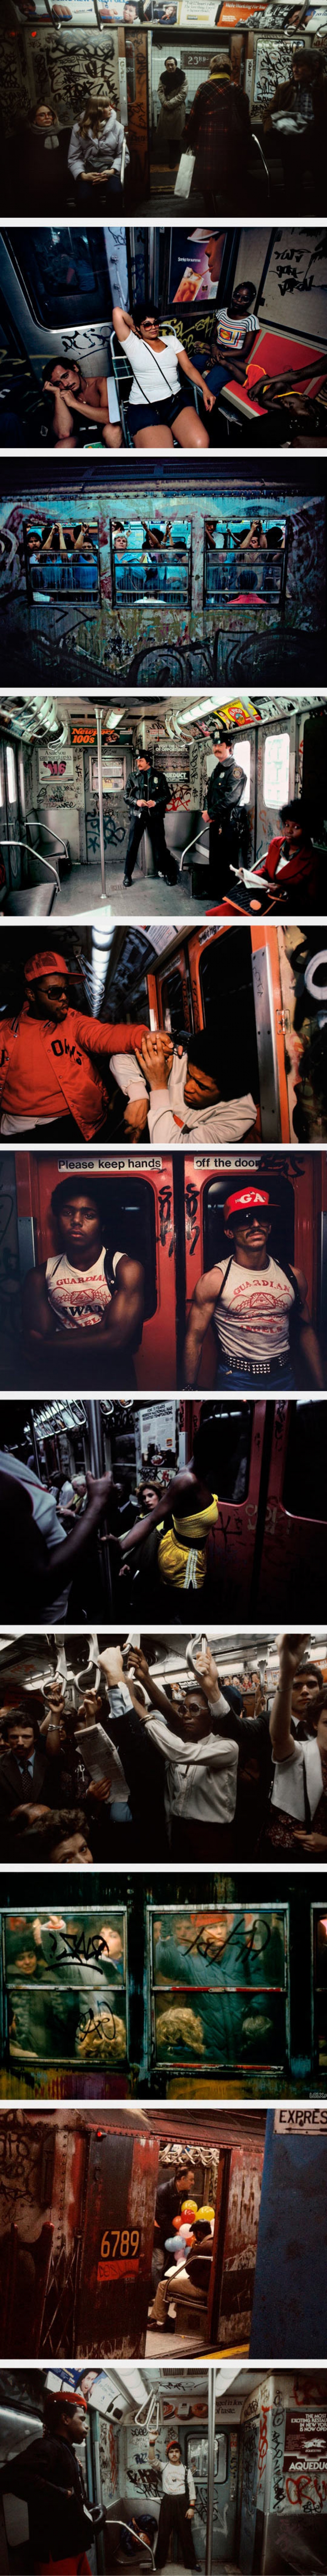 New York City Subway Photos Taken In The 80s